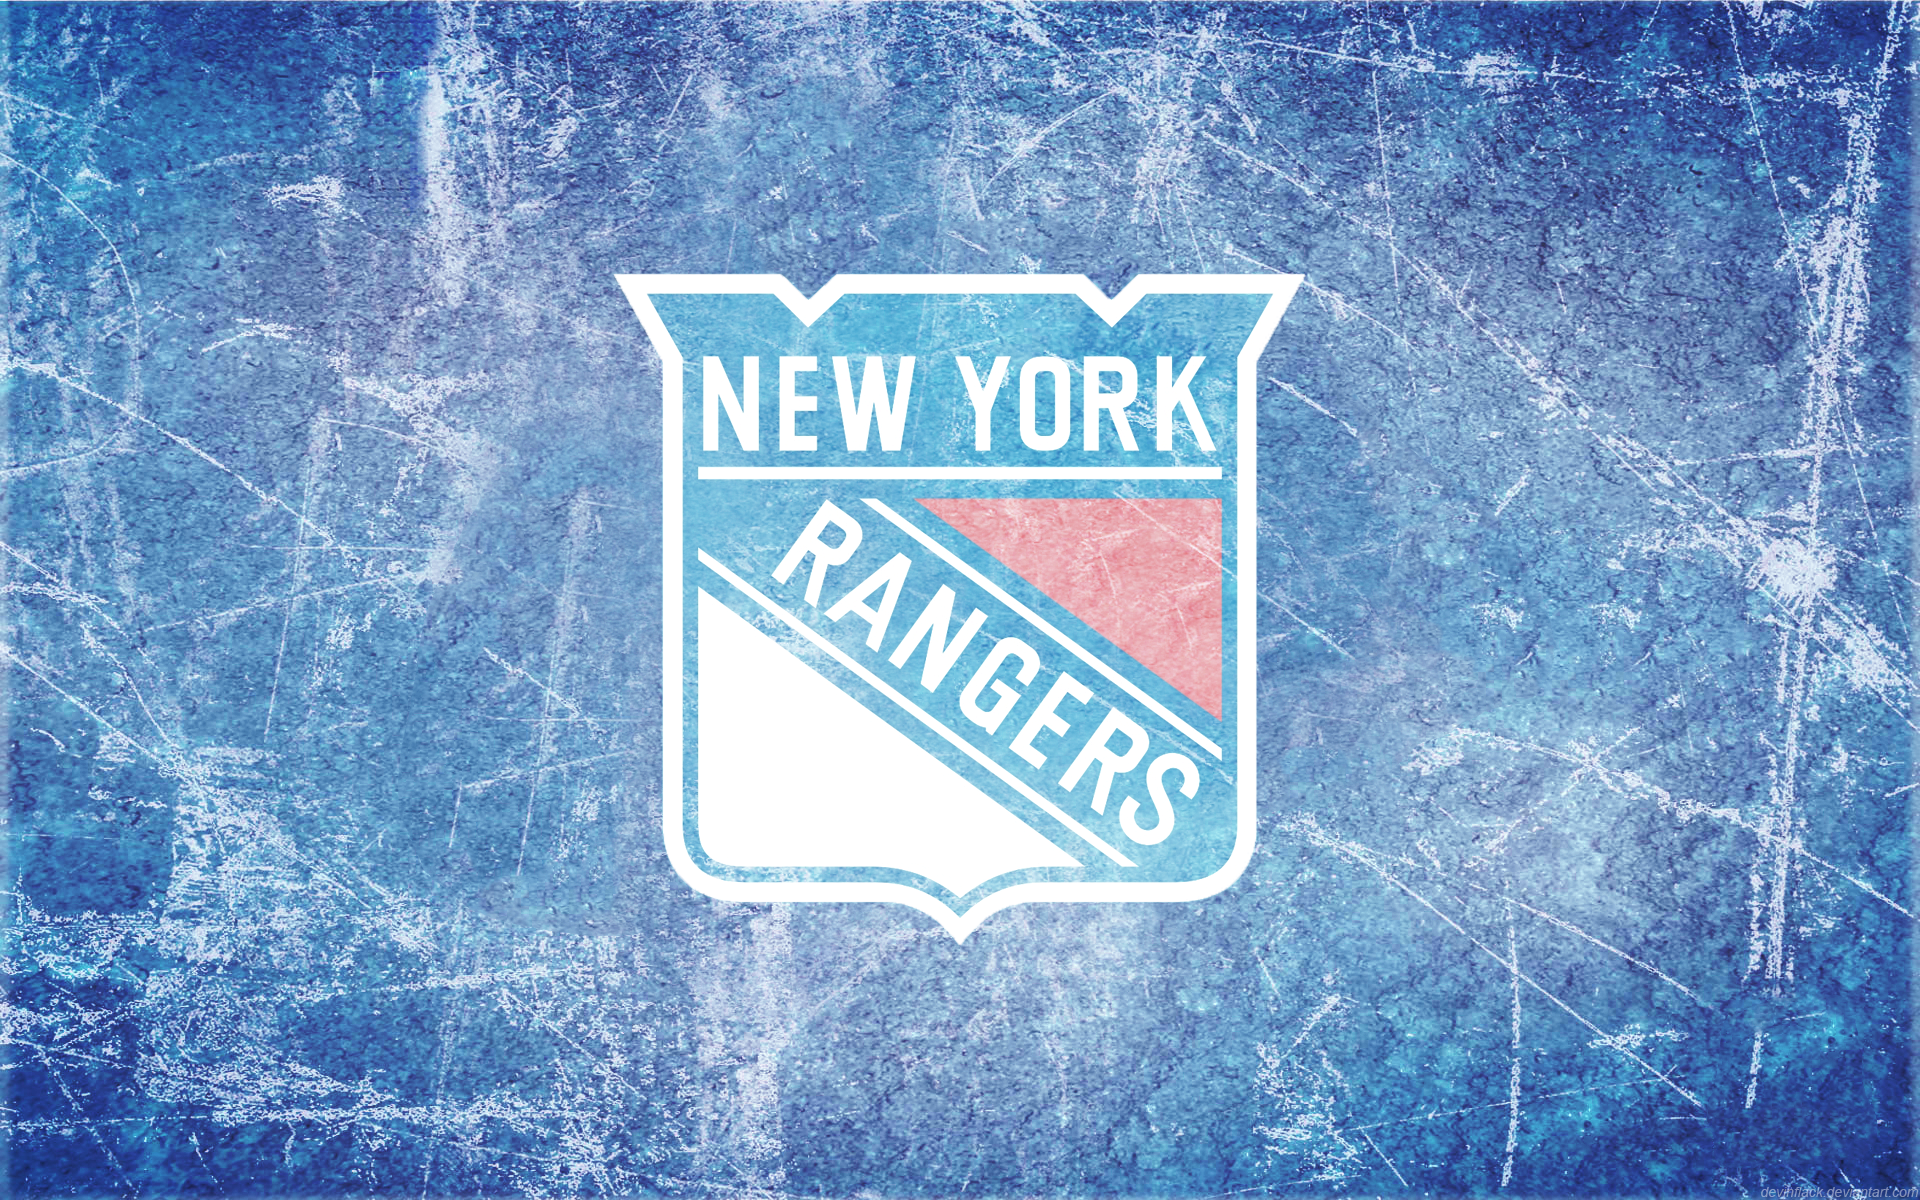 New York Rangers wallpaper | 1920x1200